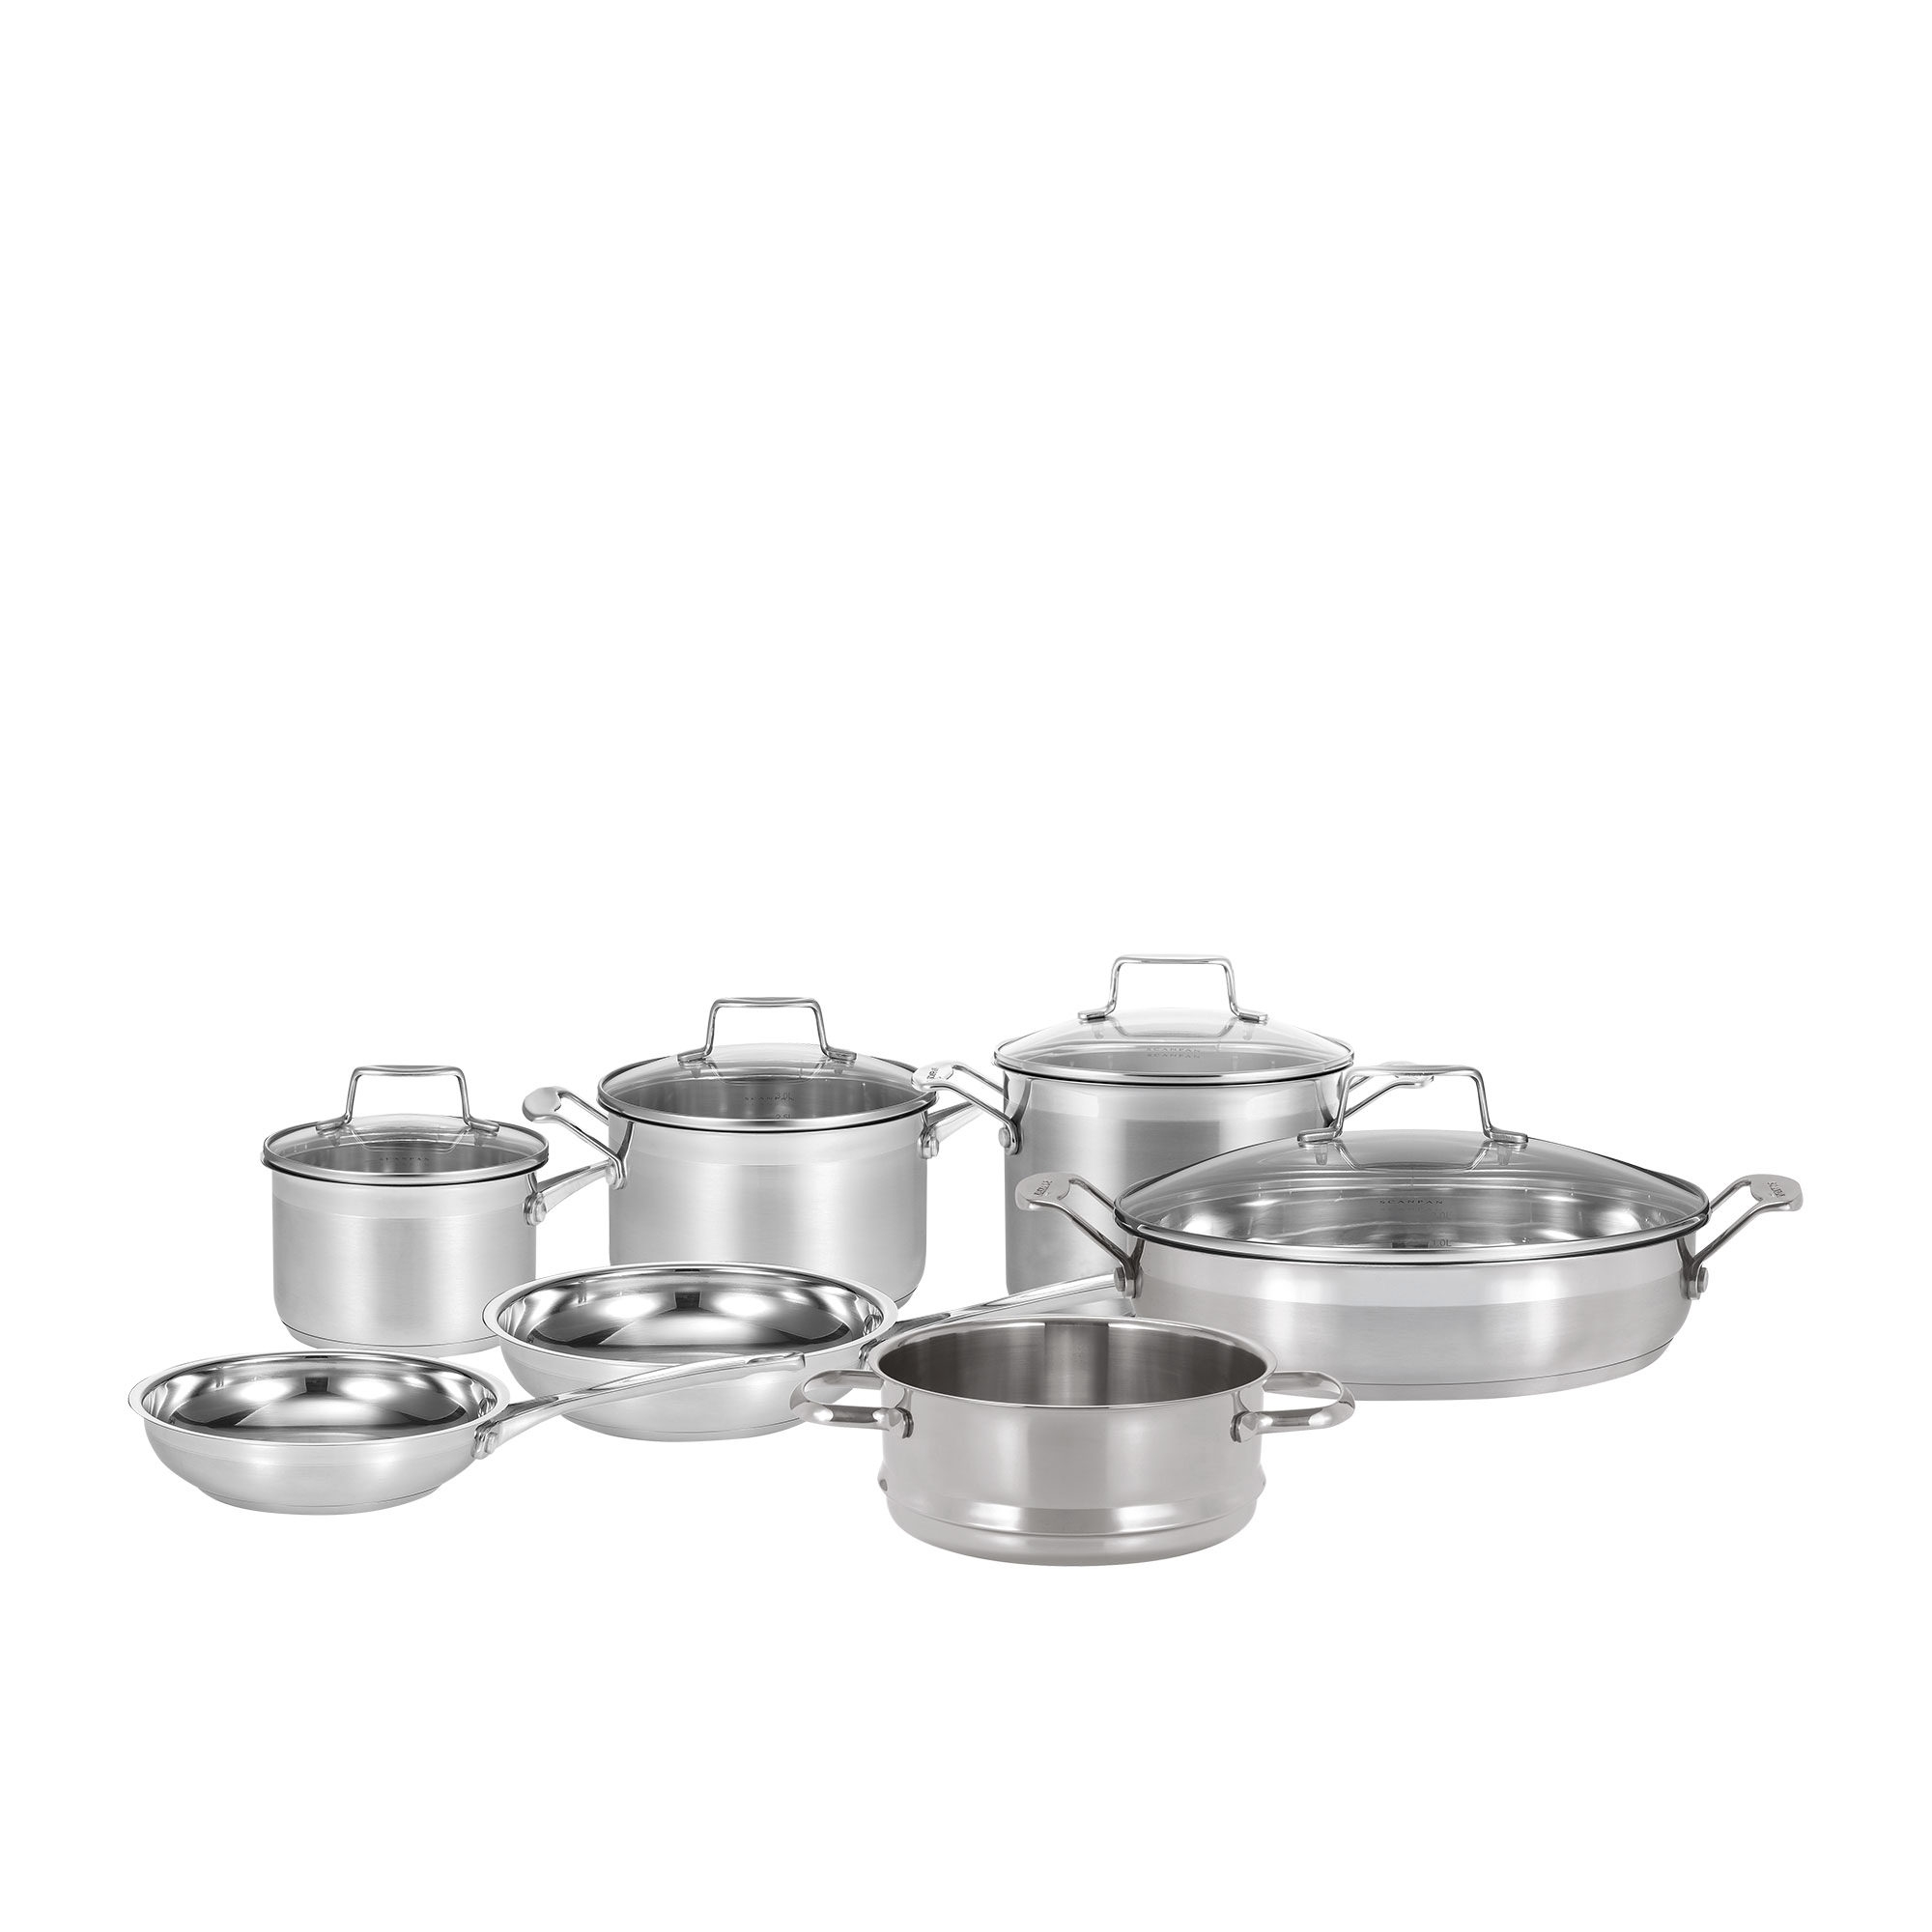 Scanpan Impact 7pc Stainless Steel Cookware Set Image 1